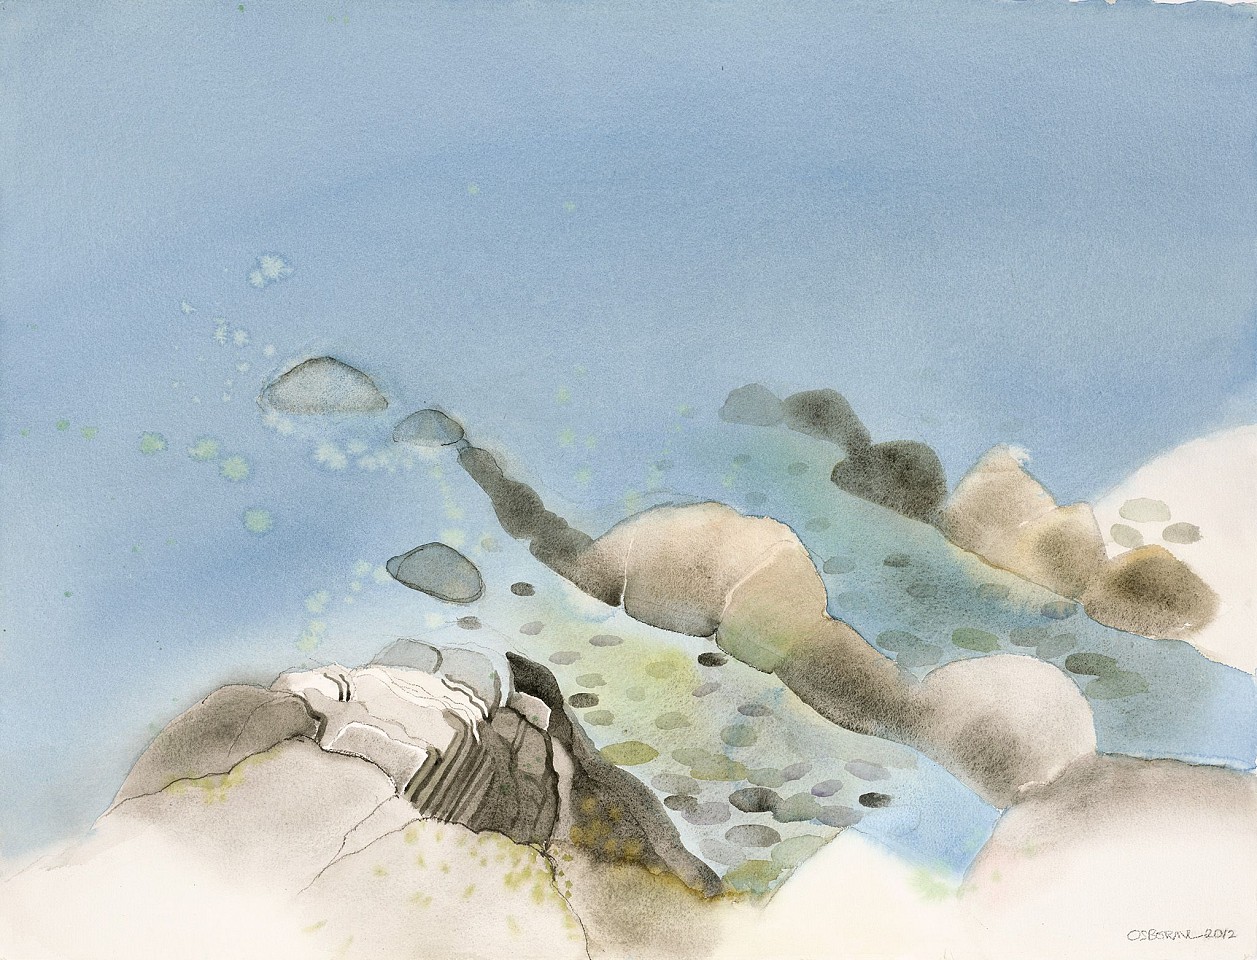 Elizabeth Osborne, Nova Scotia II, 2012
Watercolor on paper, 22 1/2 x 30 in. (57.1 x 76.2 cm)
OSB-00082